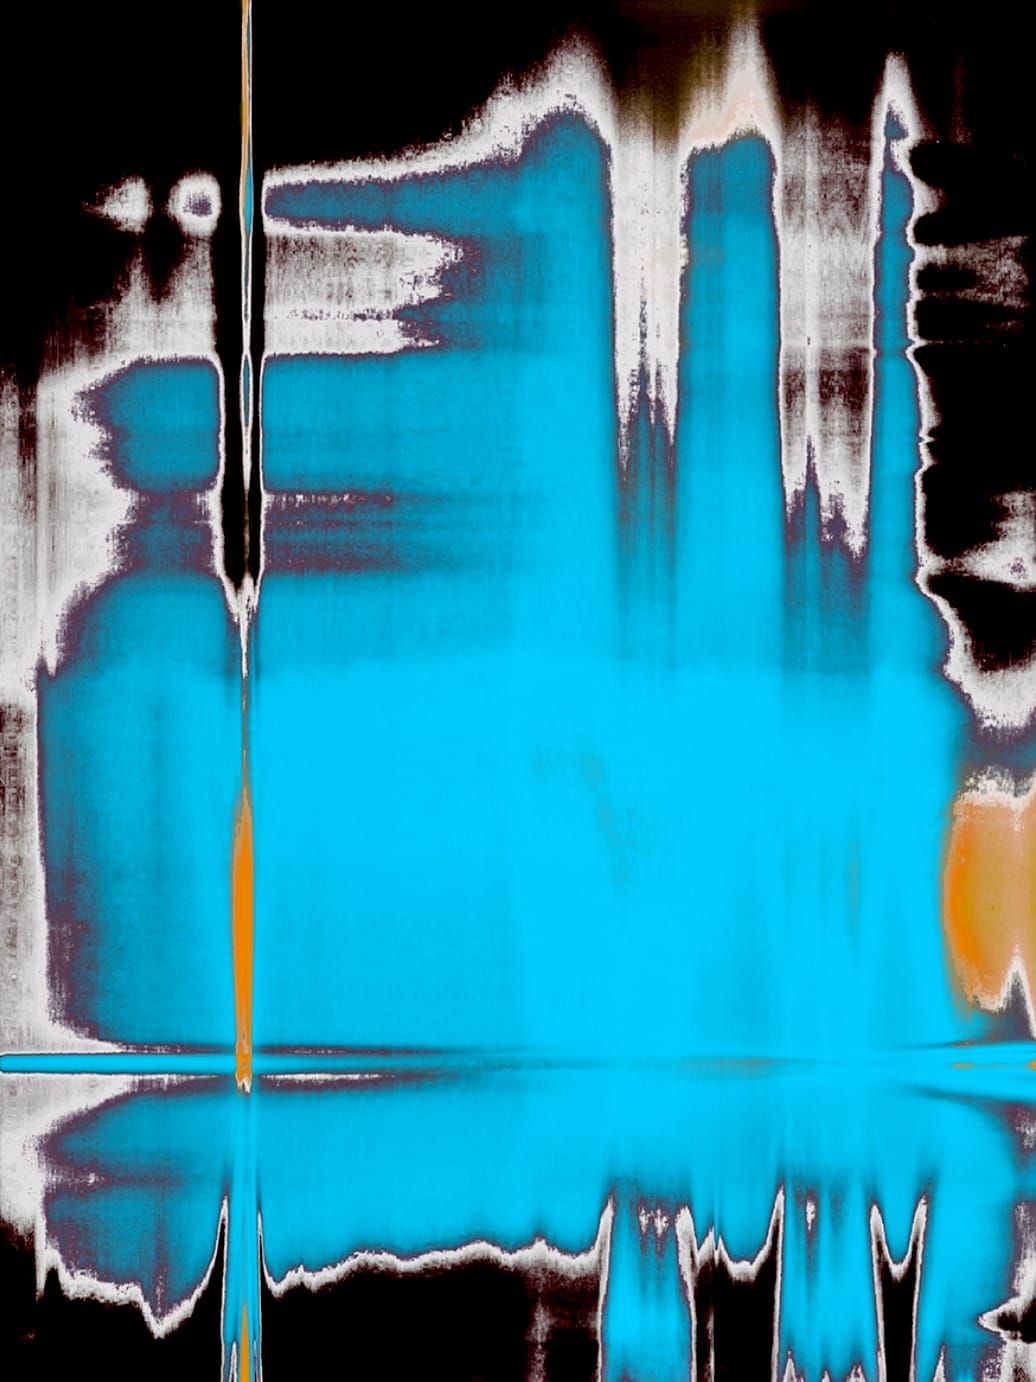 Fotografia, Scanografia di Michael Monney alias acylmx, Immagine astratta in blu